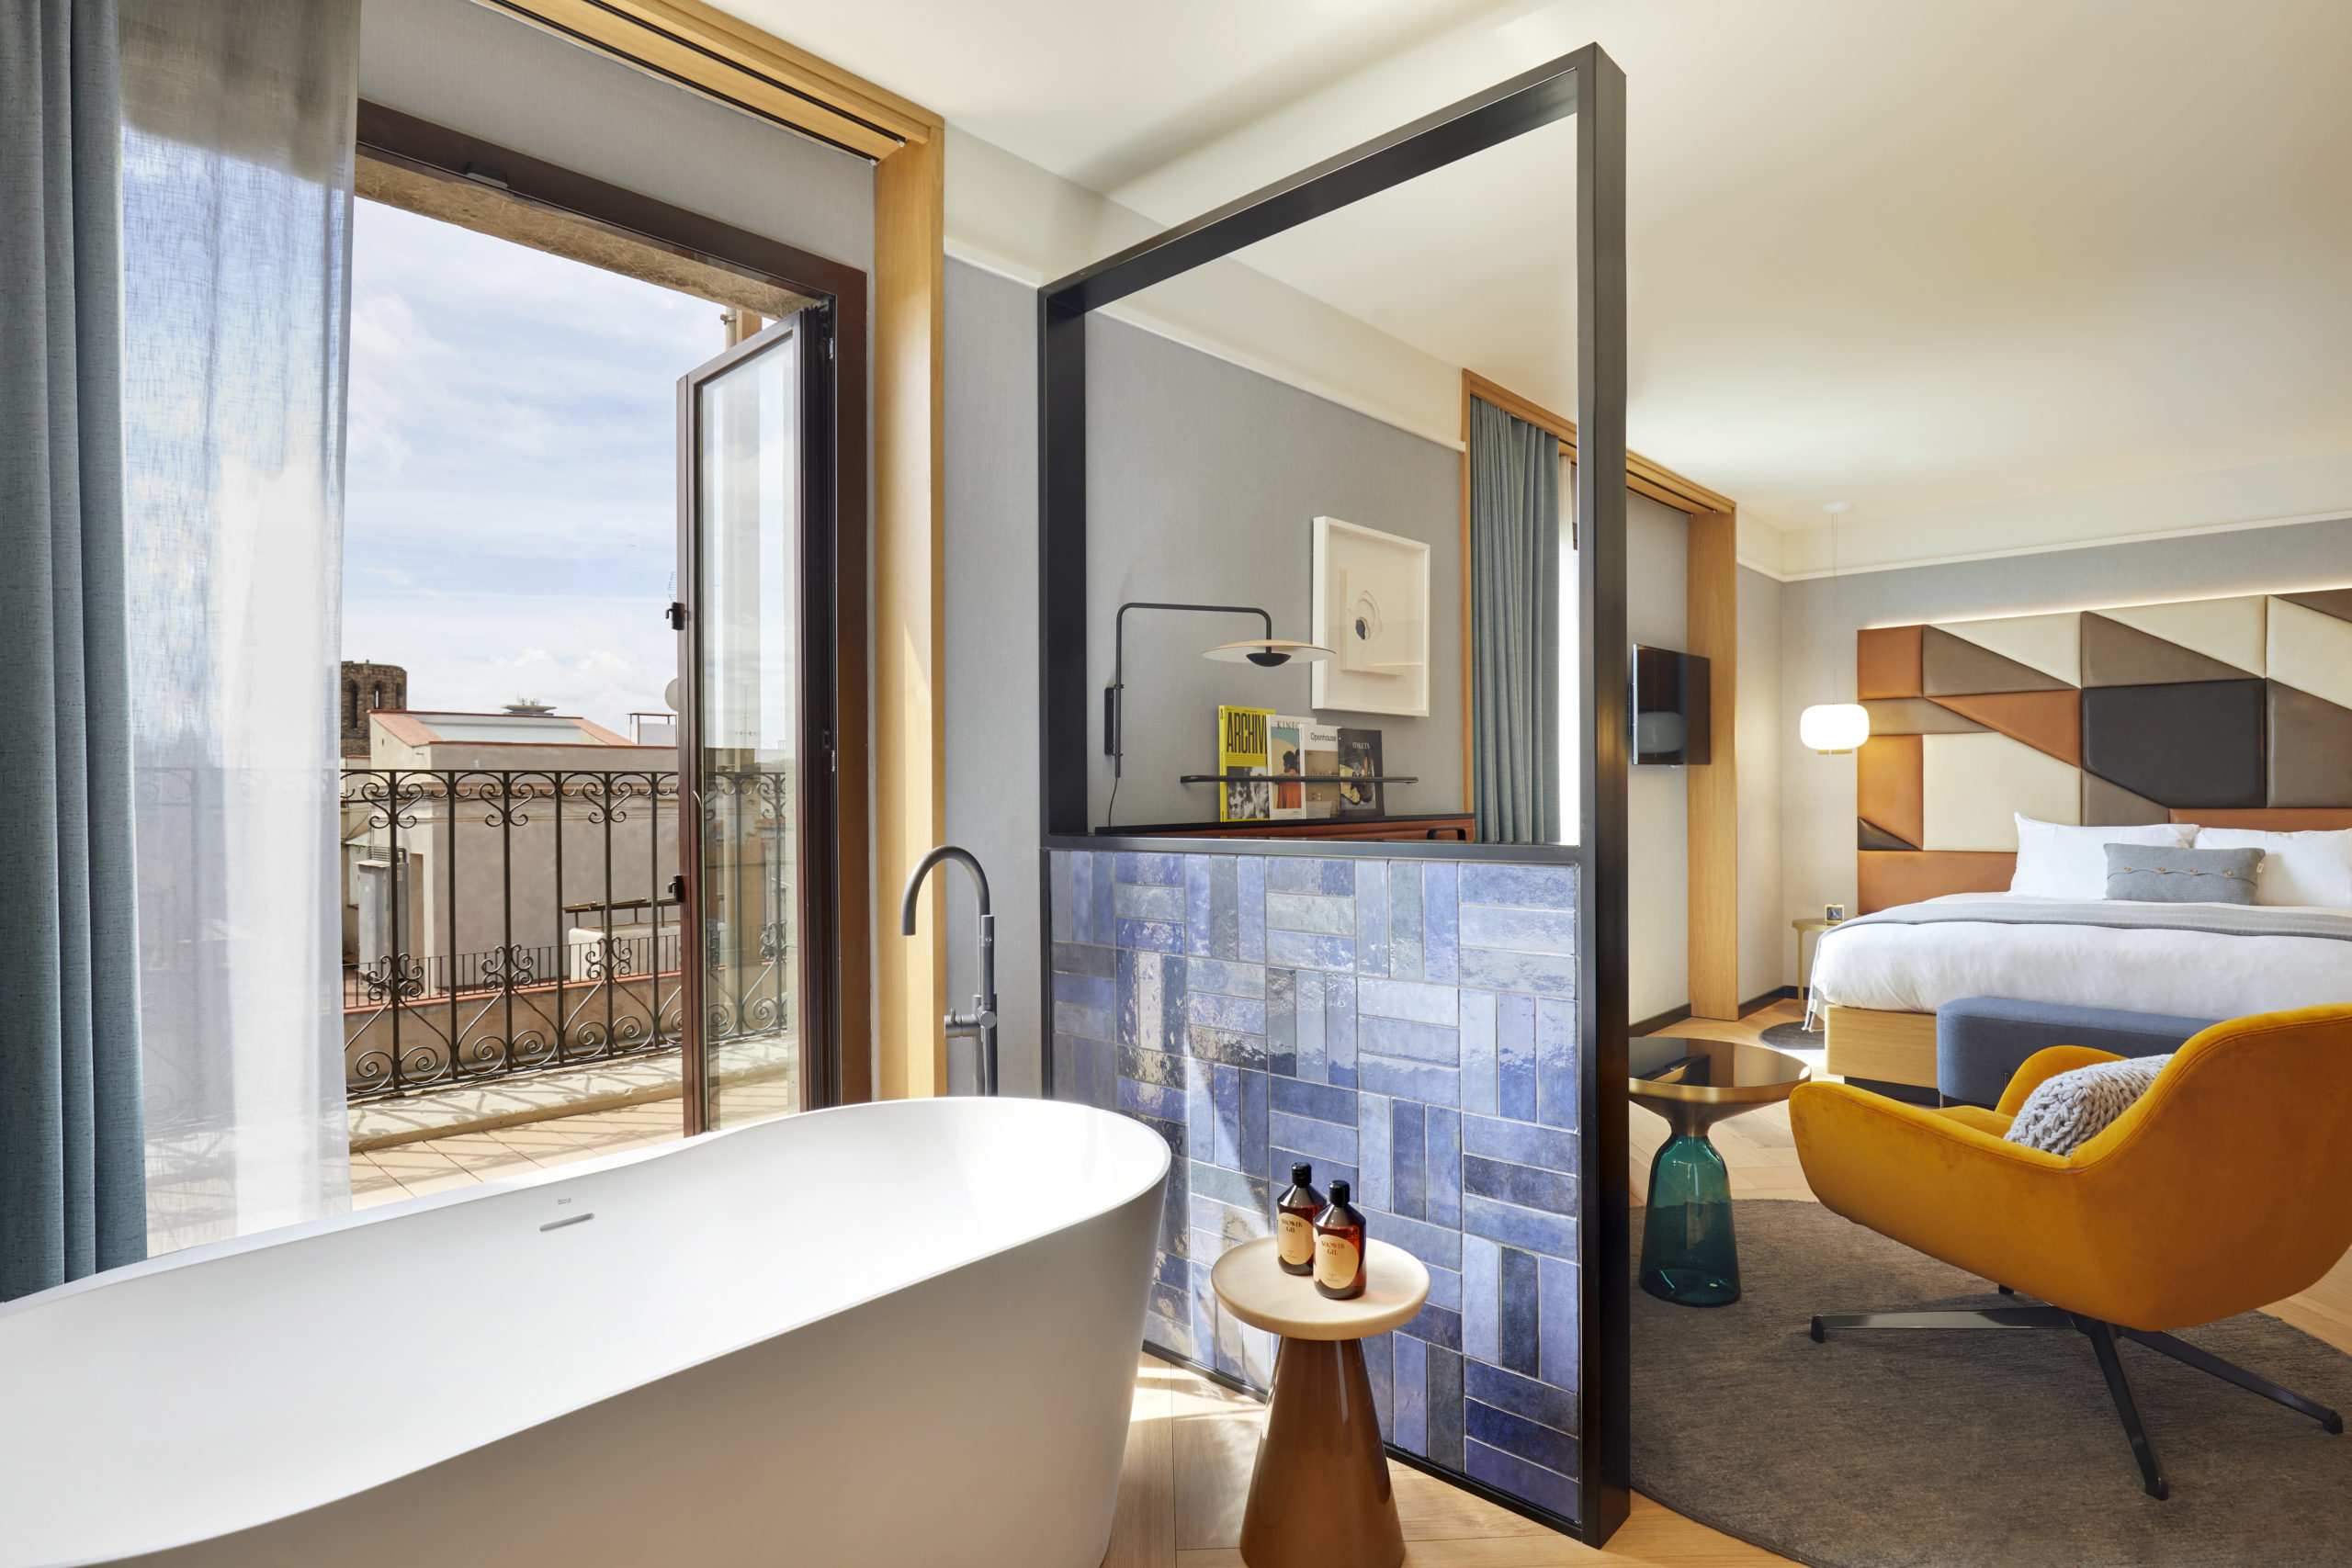 Junior Suite loft style. Bathtubs with city views